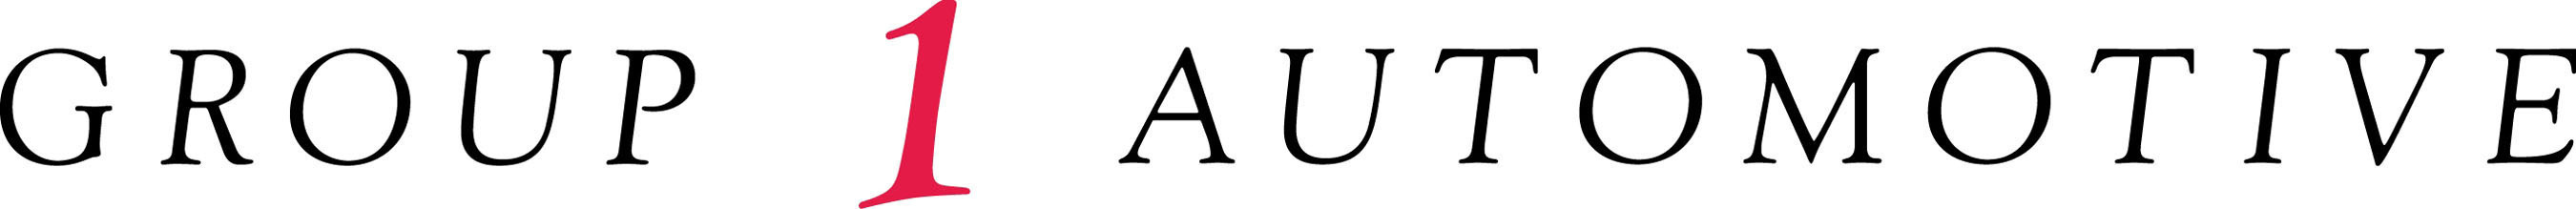 Group 1 Automotive, Inc. Logo.